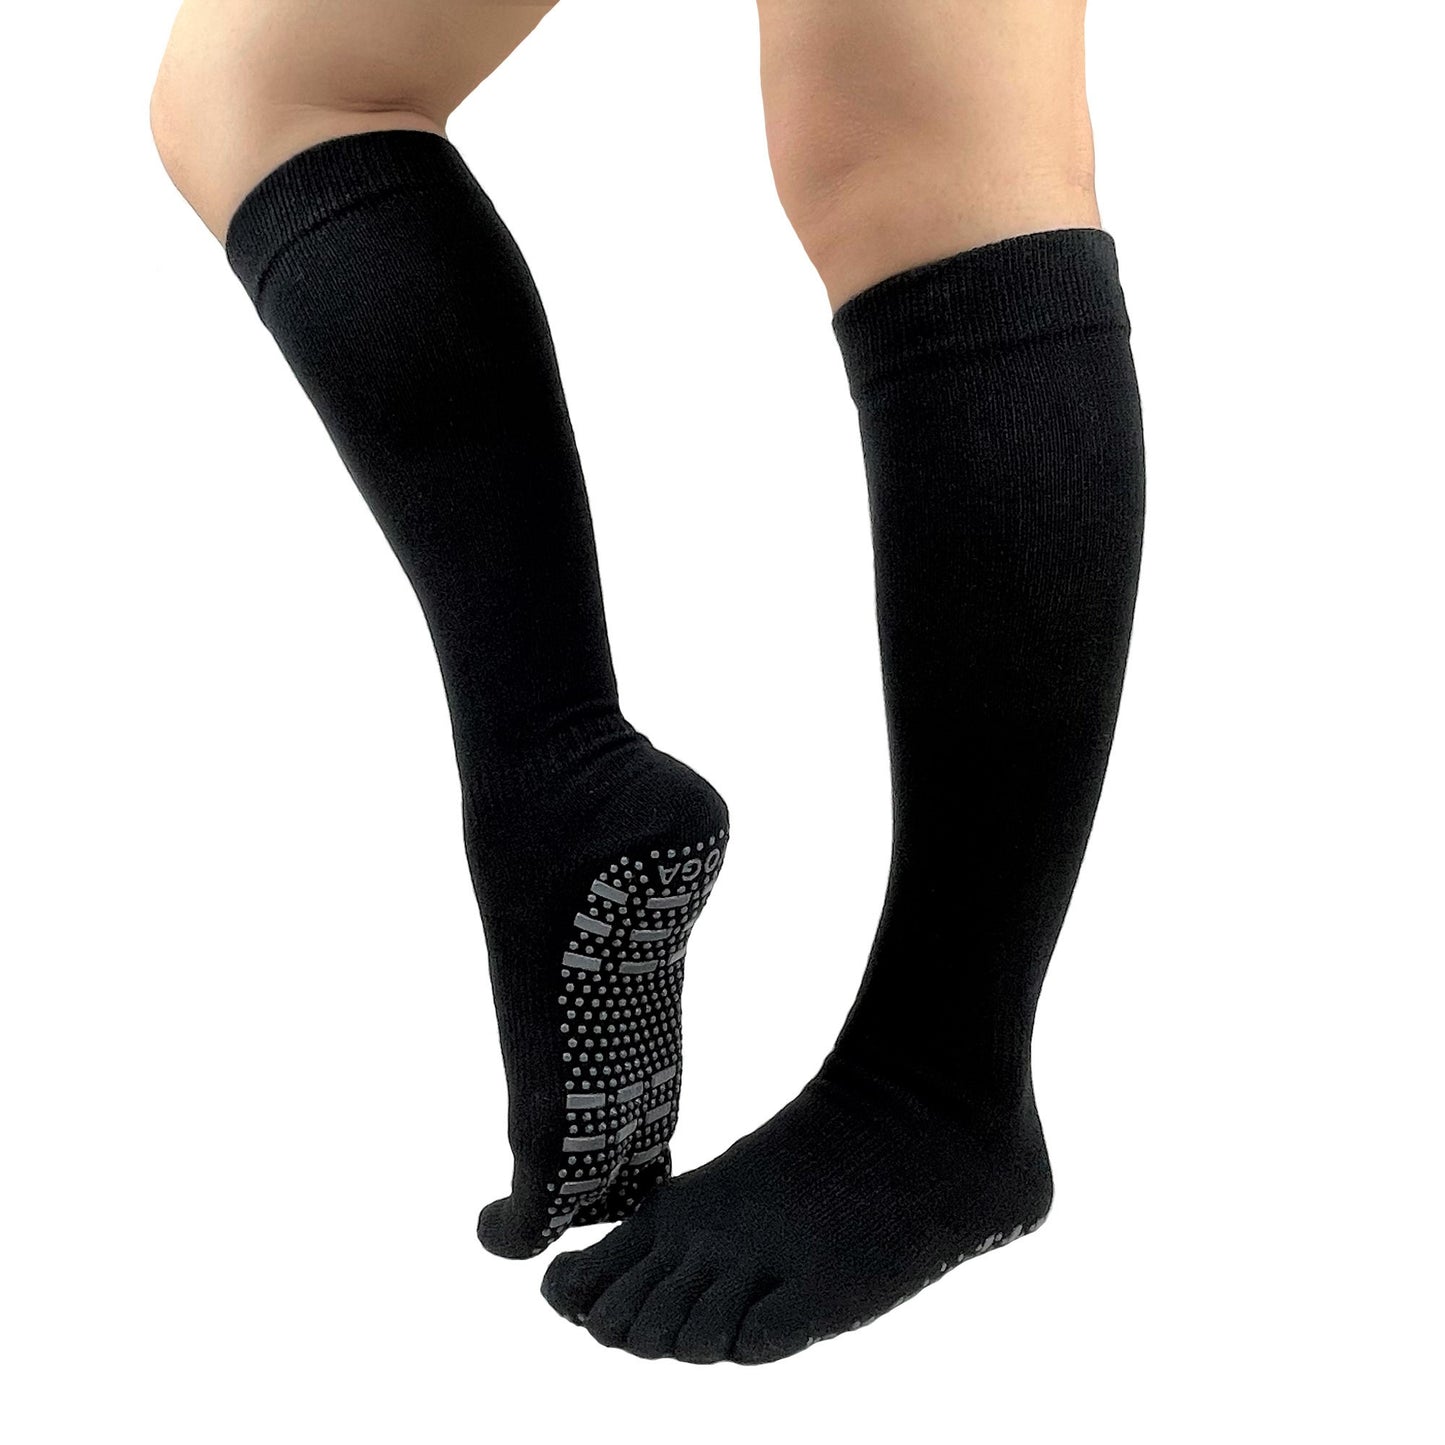 Women's Non Slip Knee Toe Socks with Grips for Yoga, Pilates, Barre and Ballet